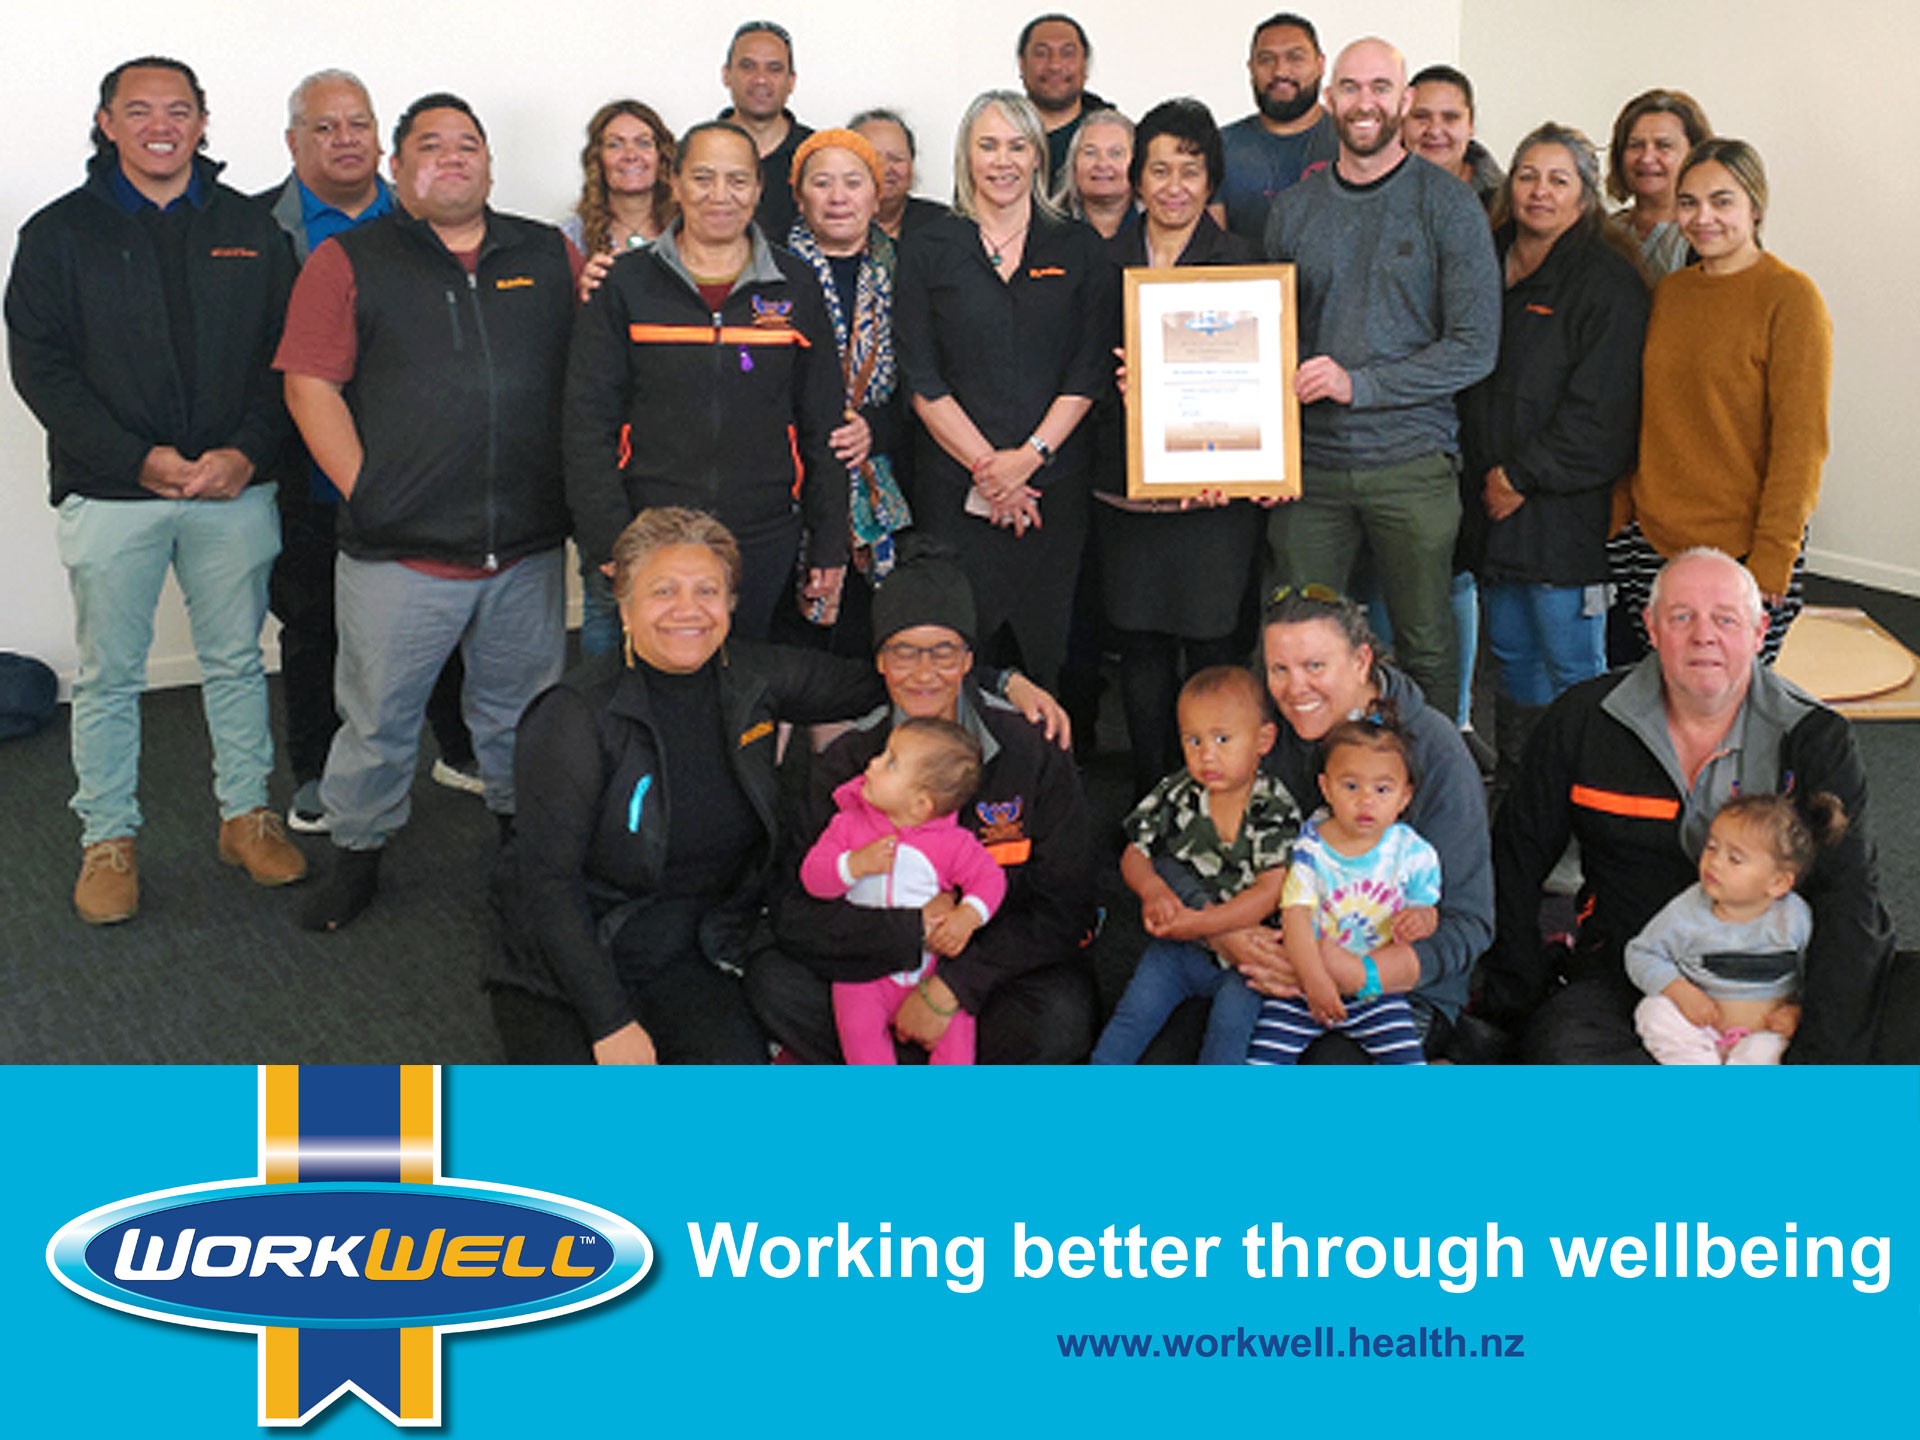 Whakatōhea Māori Trust Board leads the way in workplace wellbeing